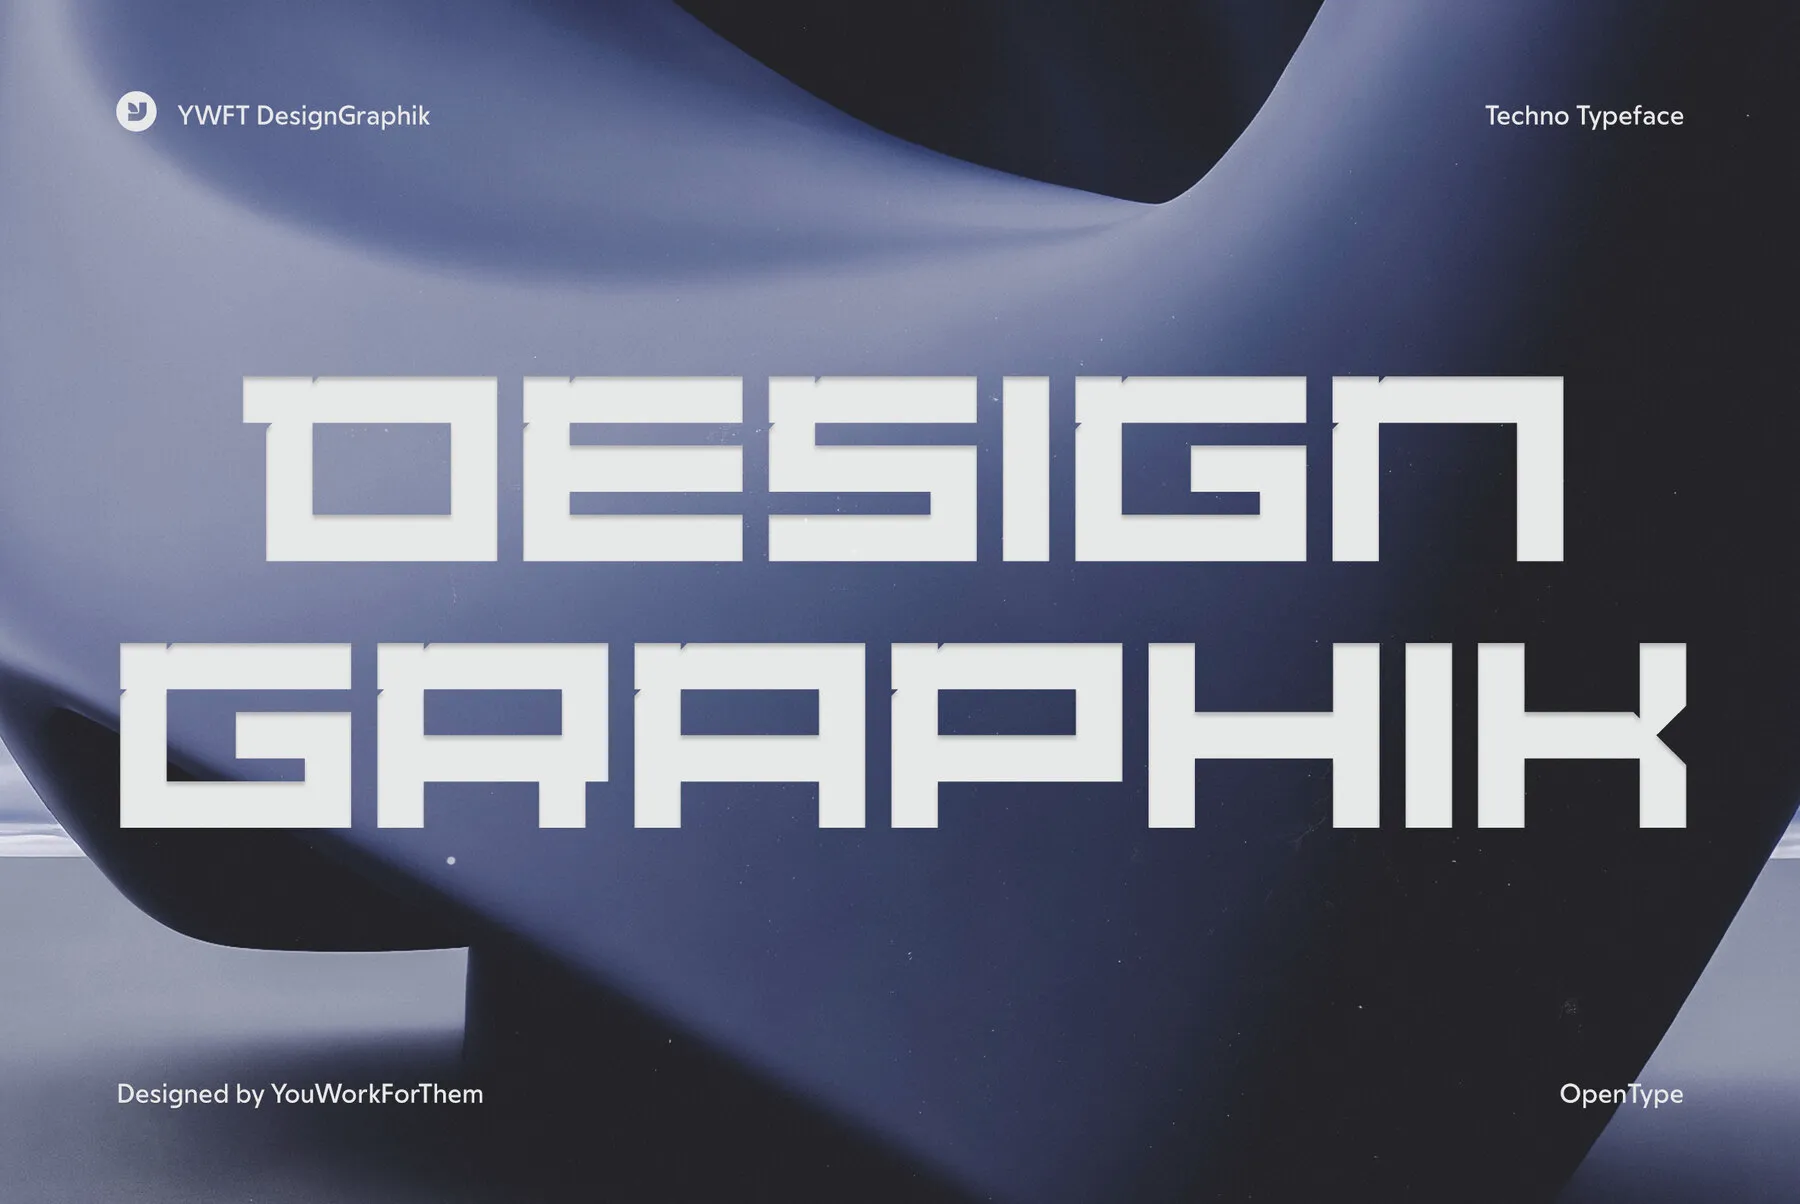 YWFT DesignGraphik